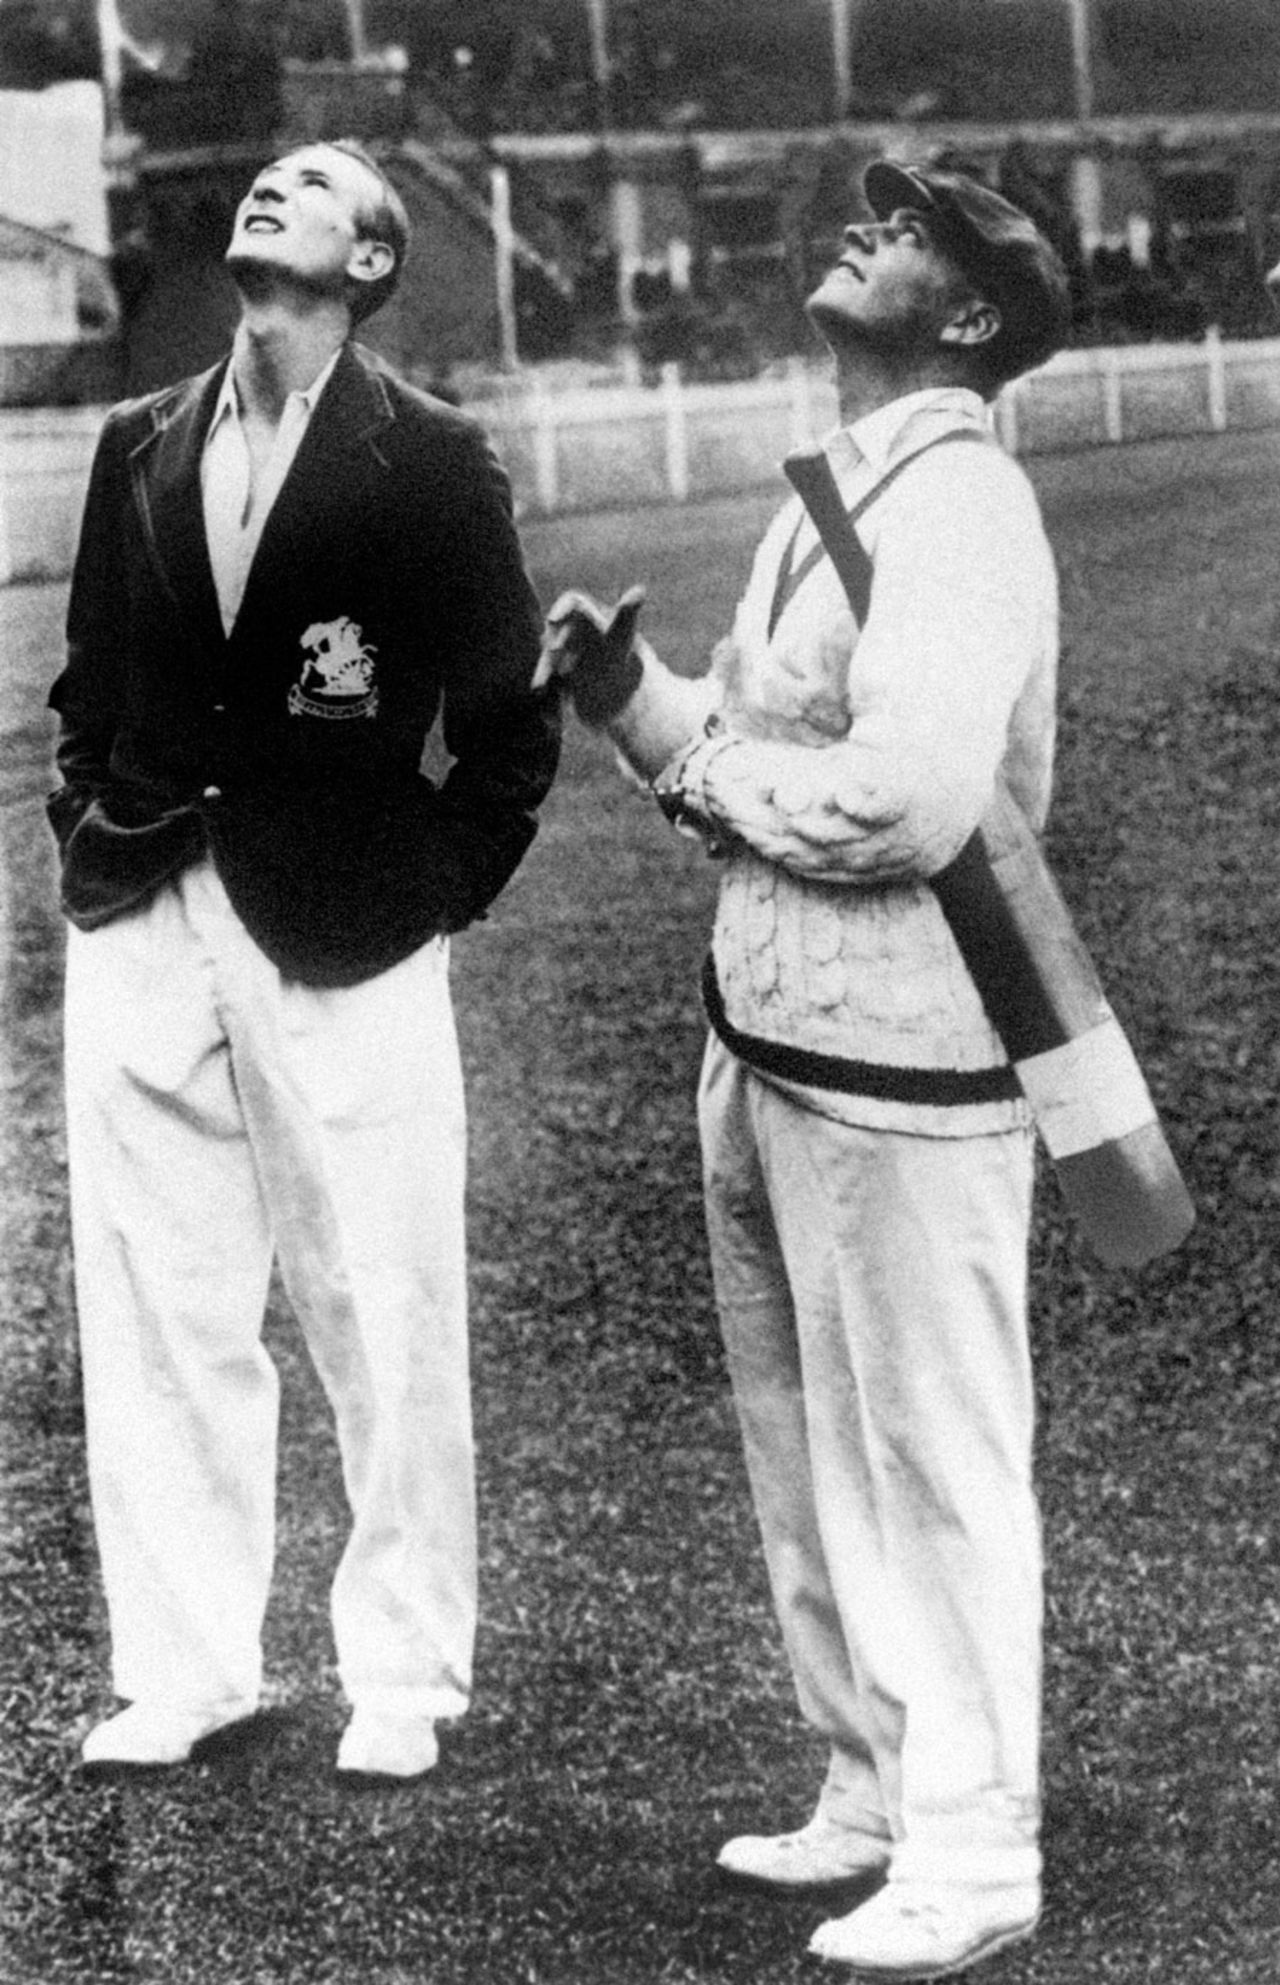 Douglas Jardine and Bill Woodfull toss ahead of the fiery Adelaide Test, Australia v England, 3rd Test, Adelaide, January 13, 1933